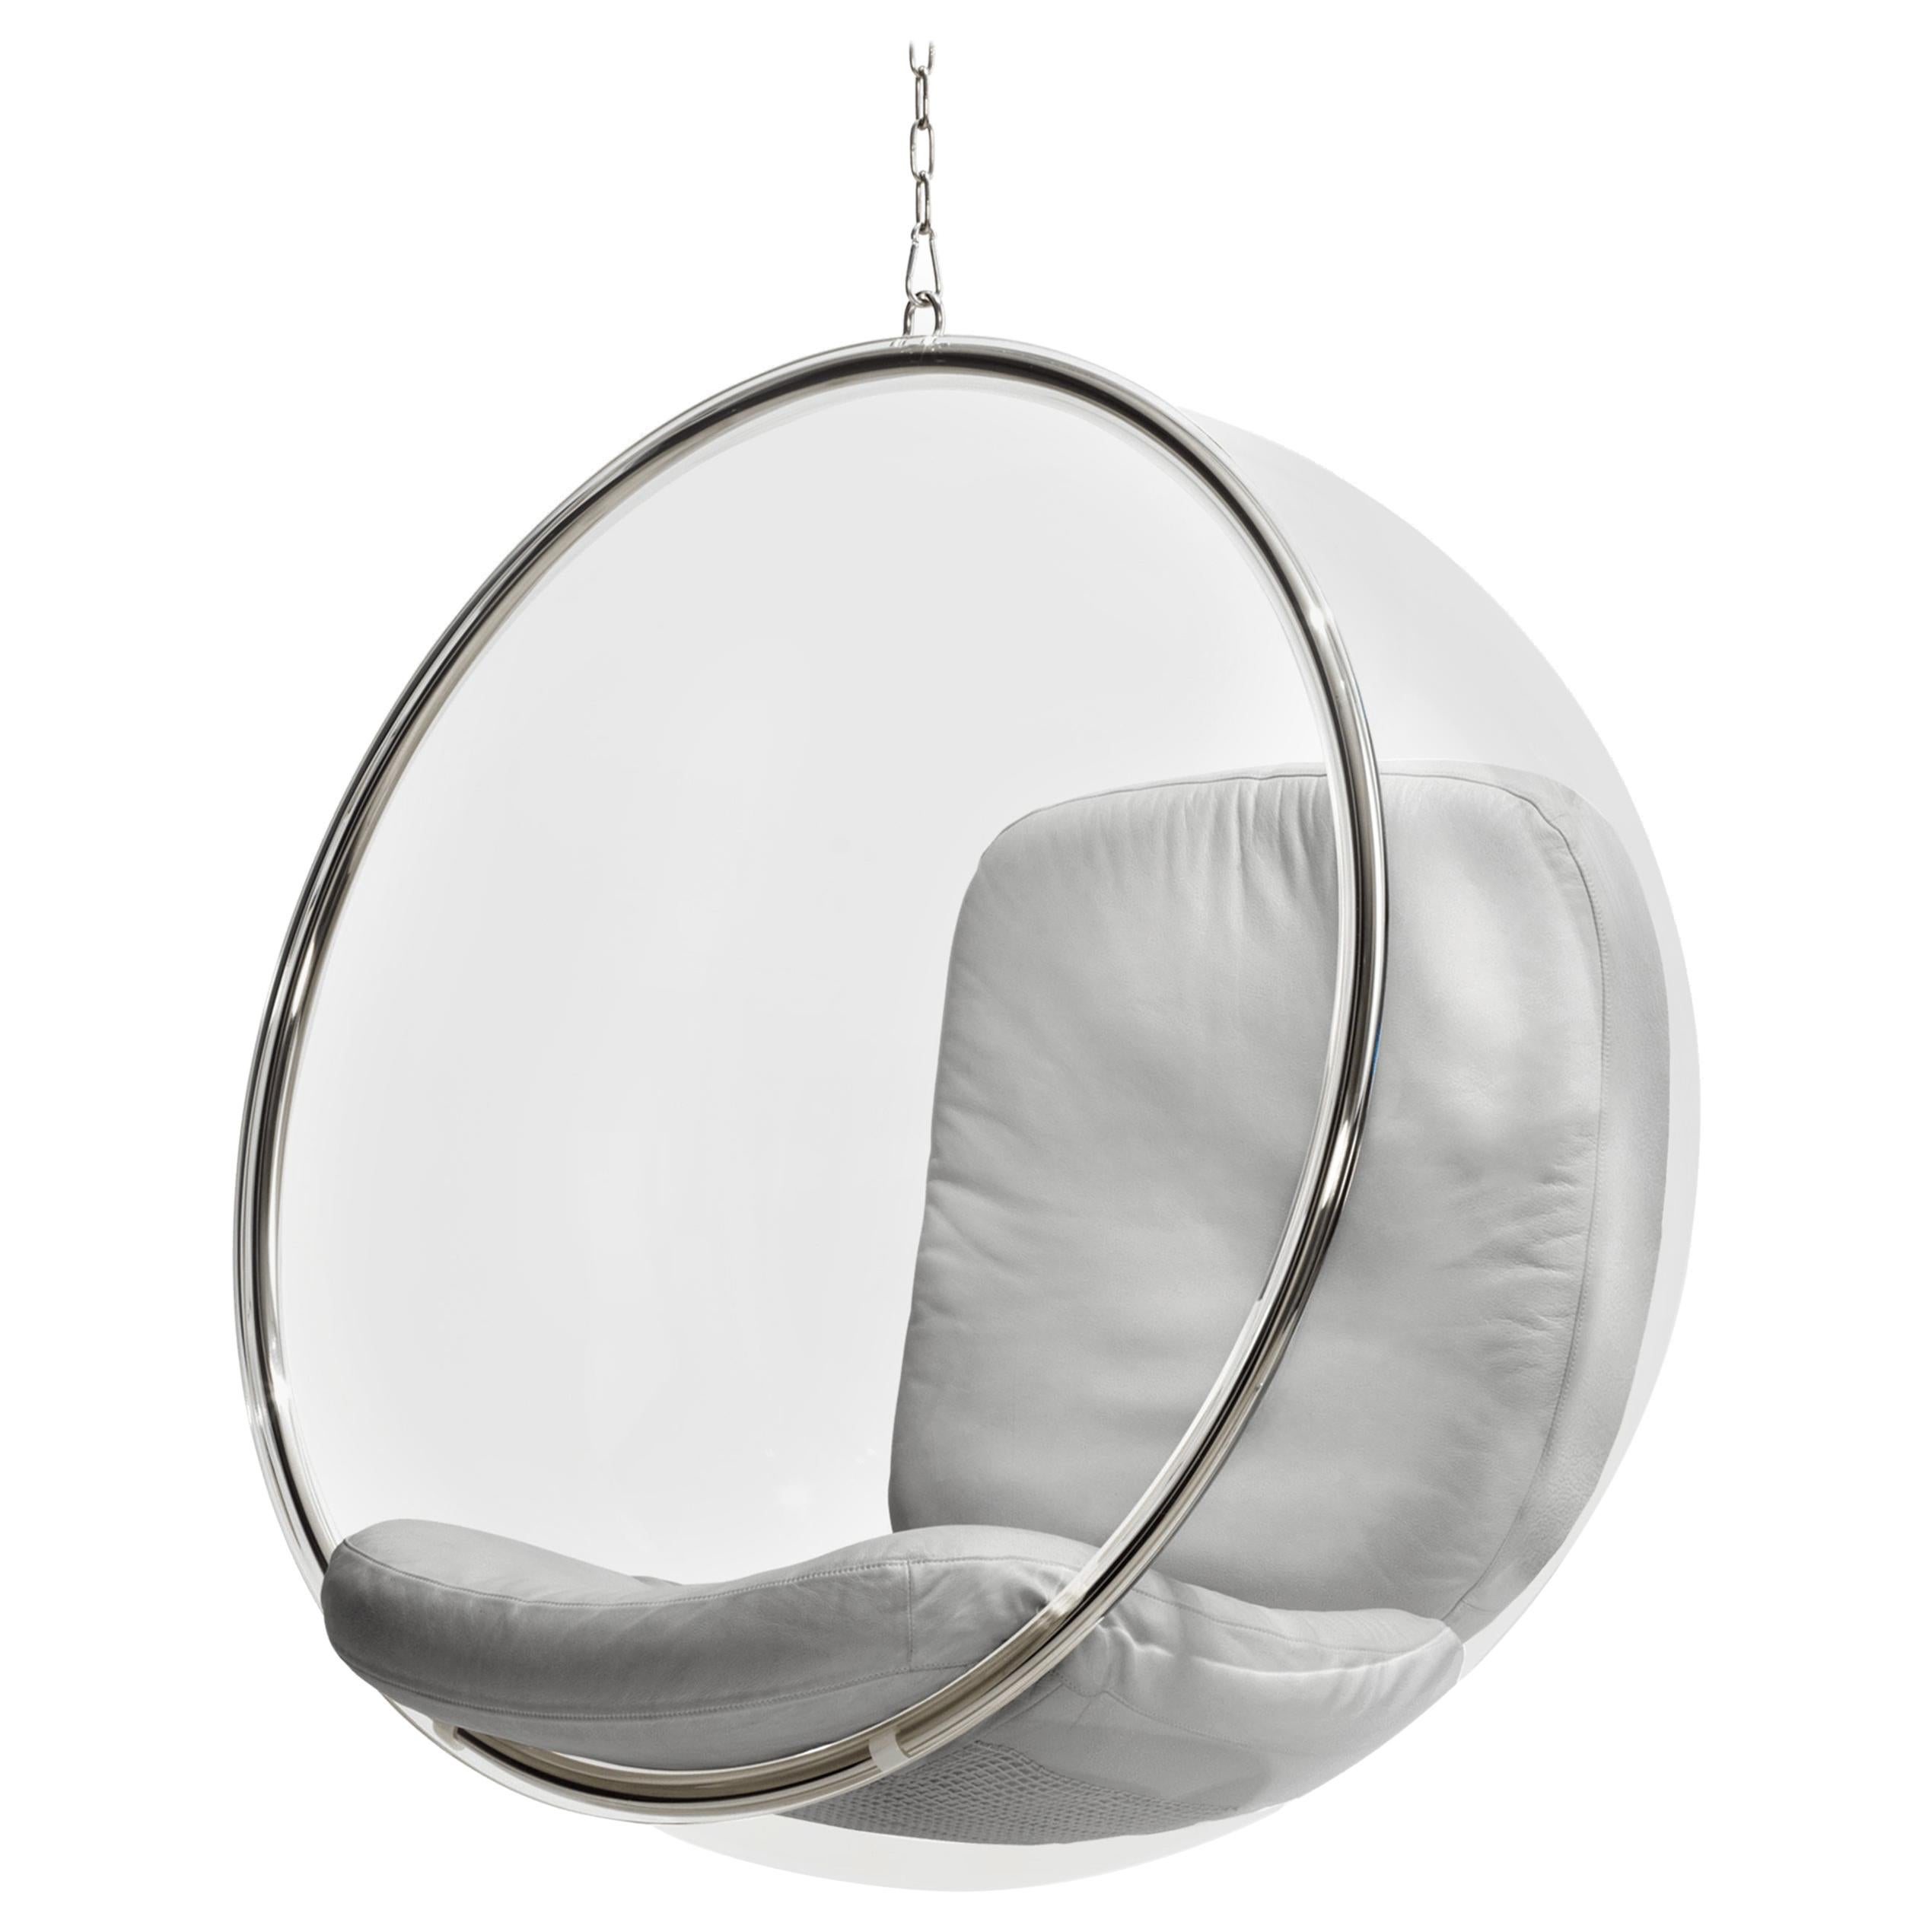 Iconic Eero Aarnio White Leather Bubble Chair